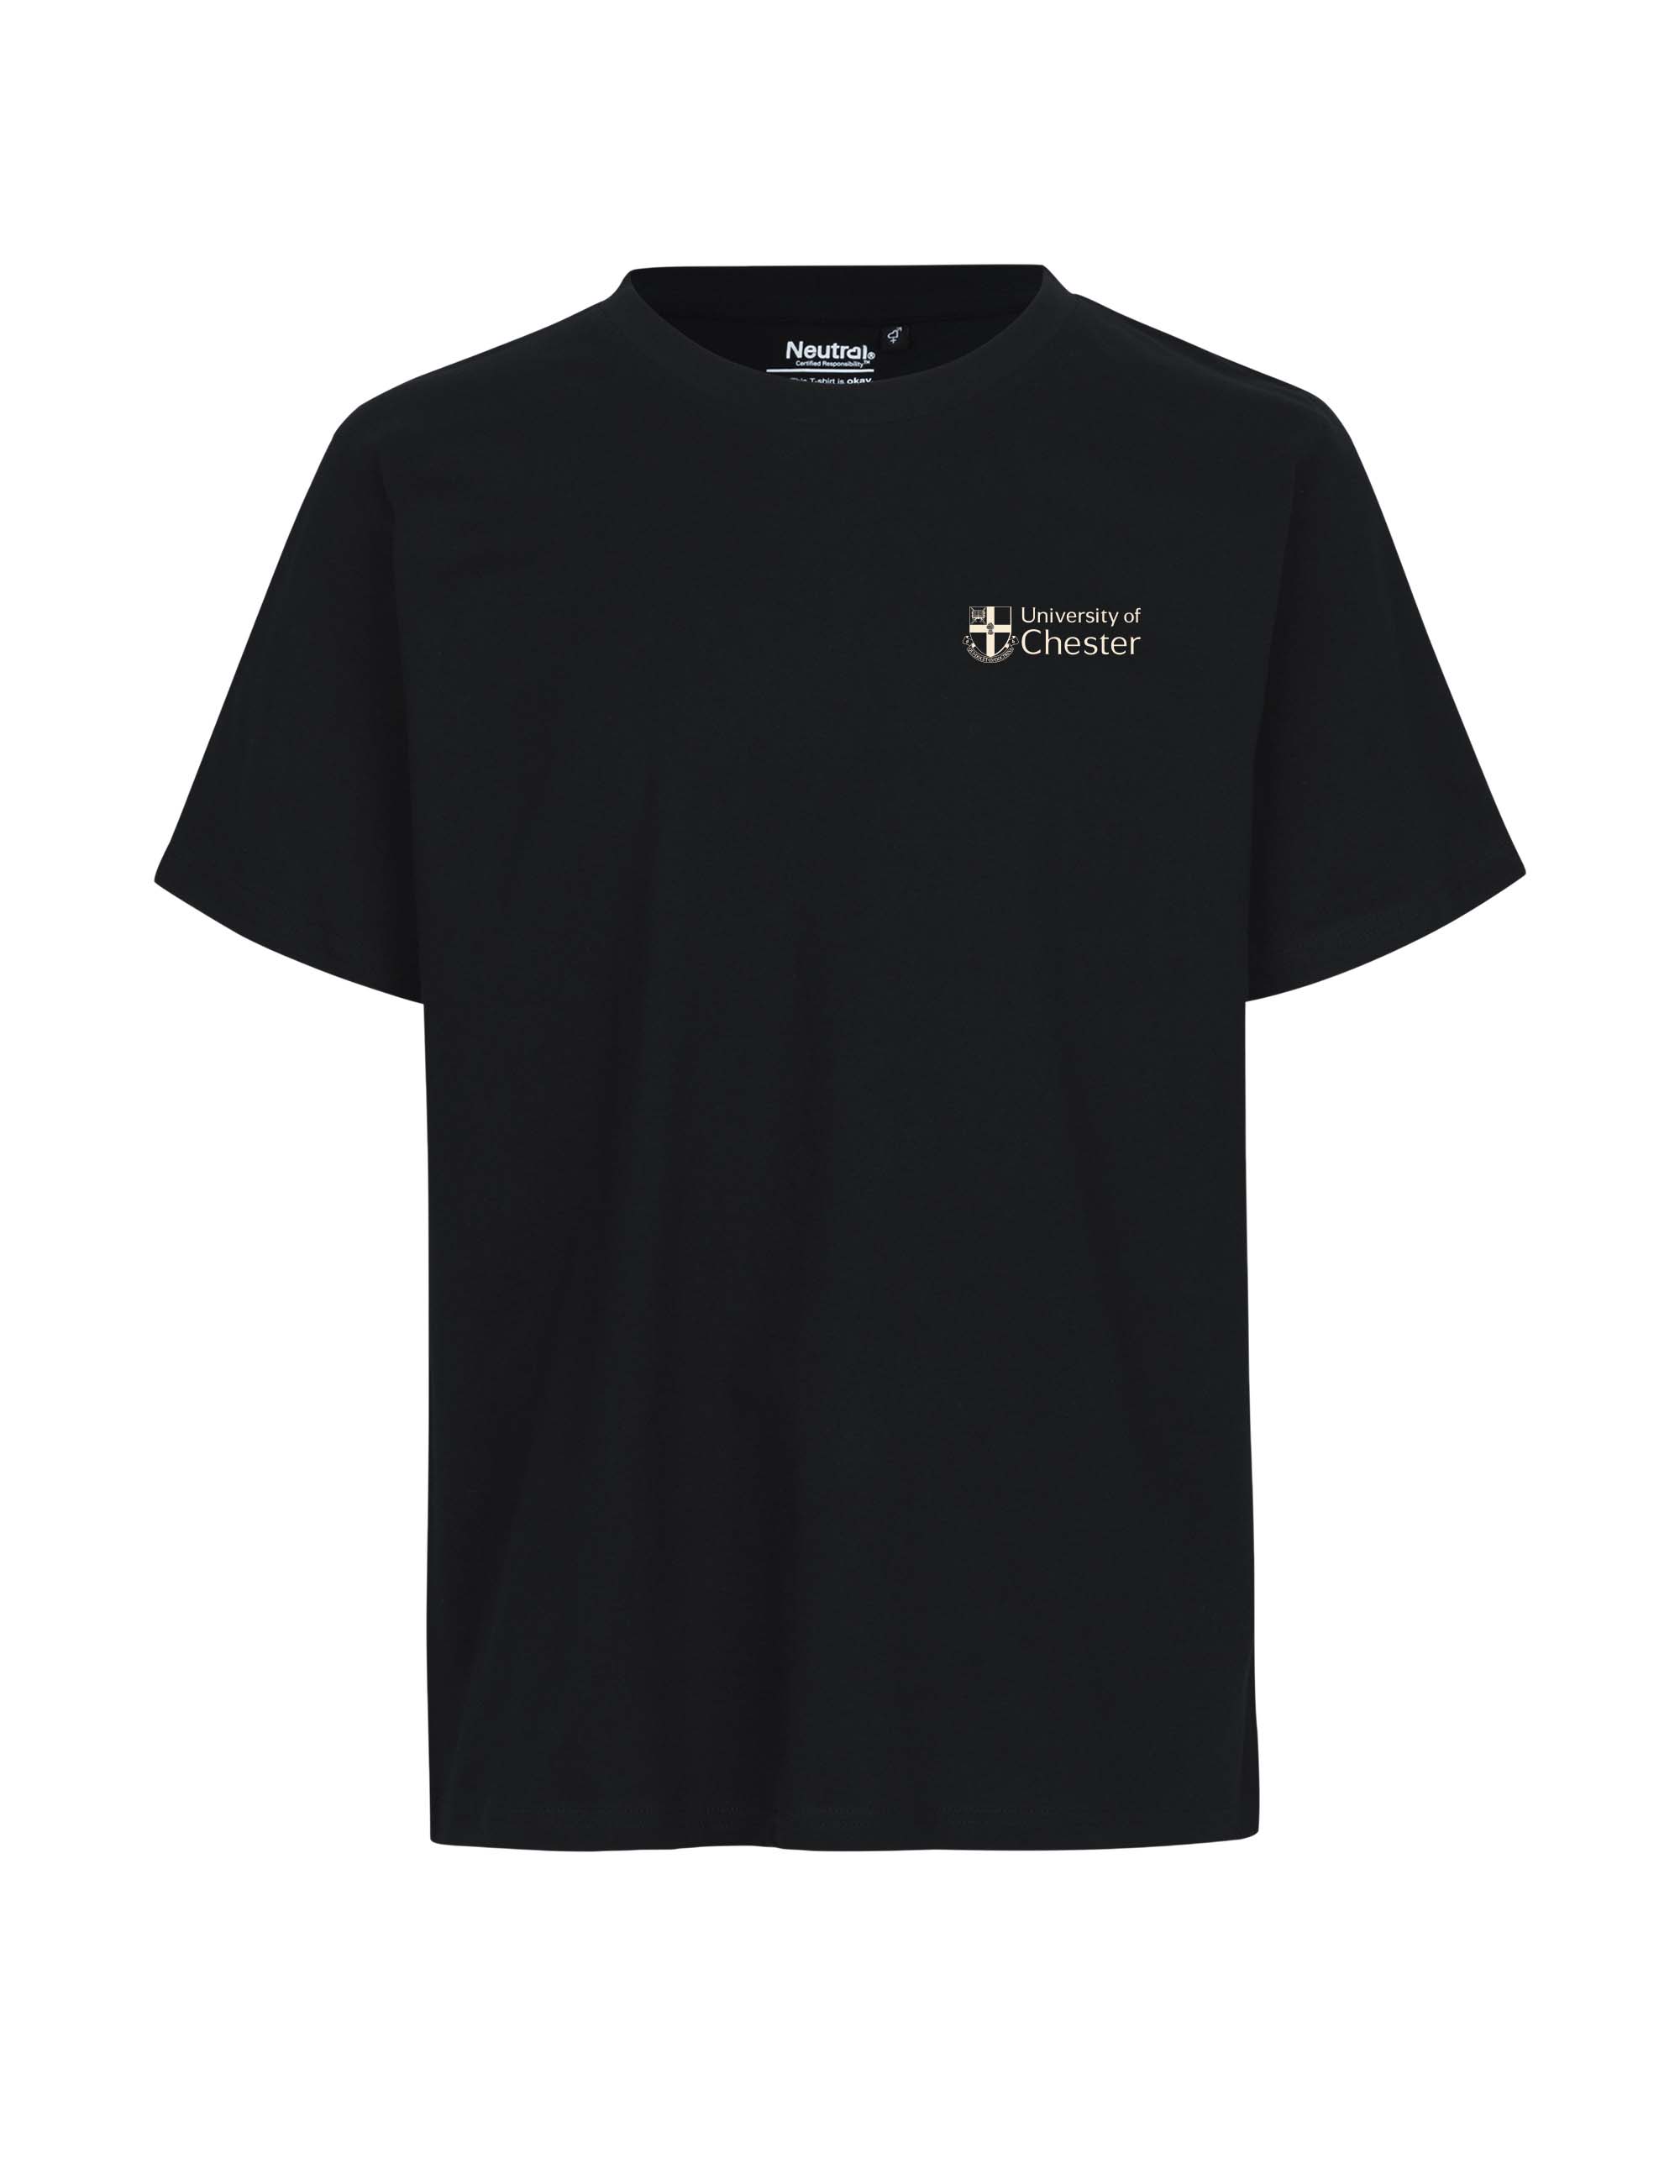 Neutral range - UoC T-Shirt - Black - M